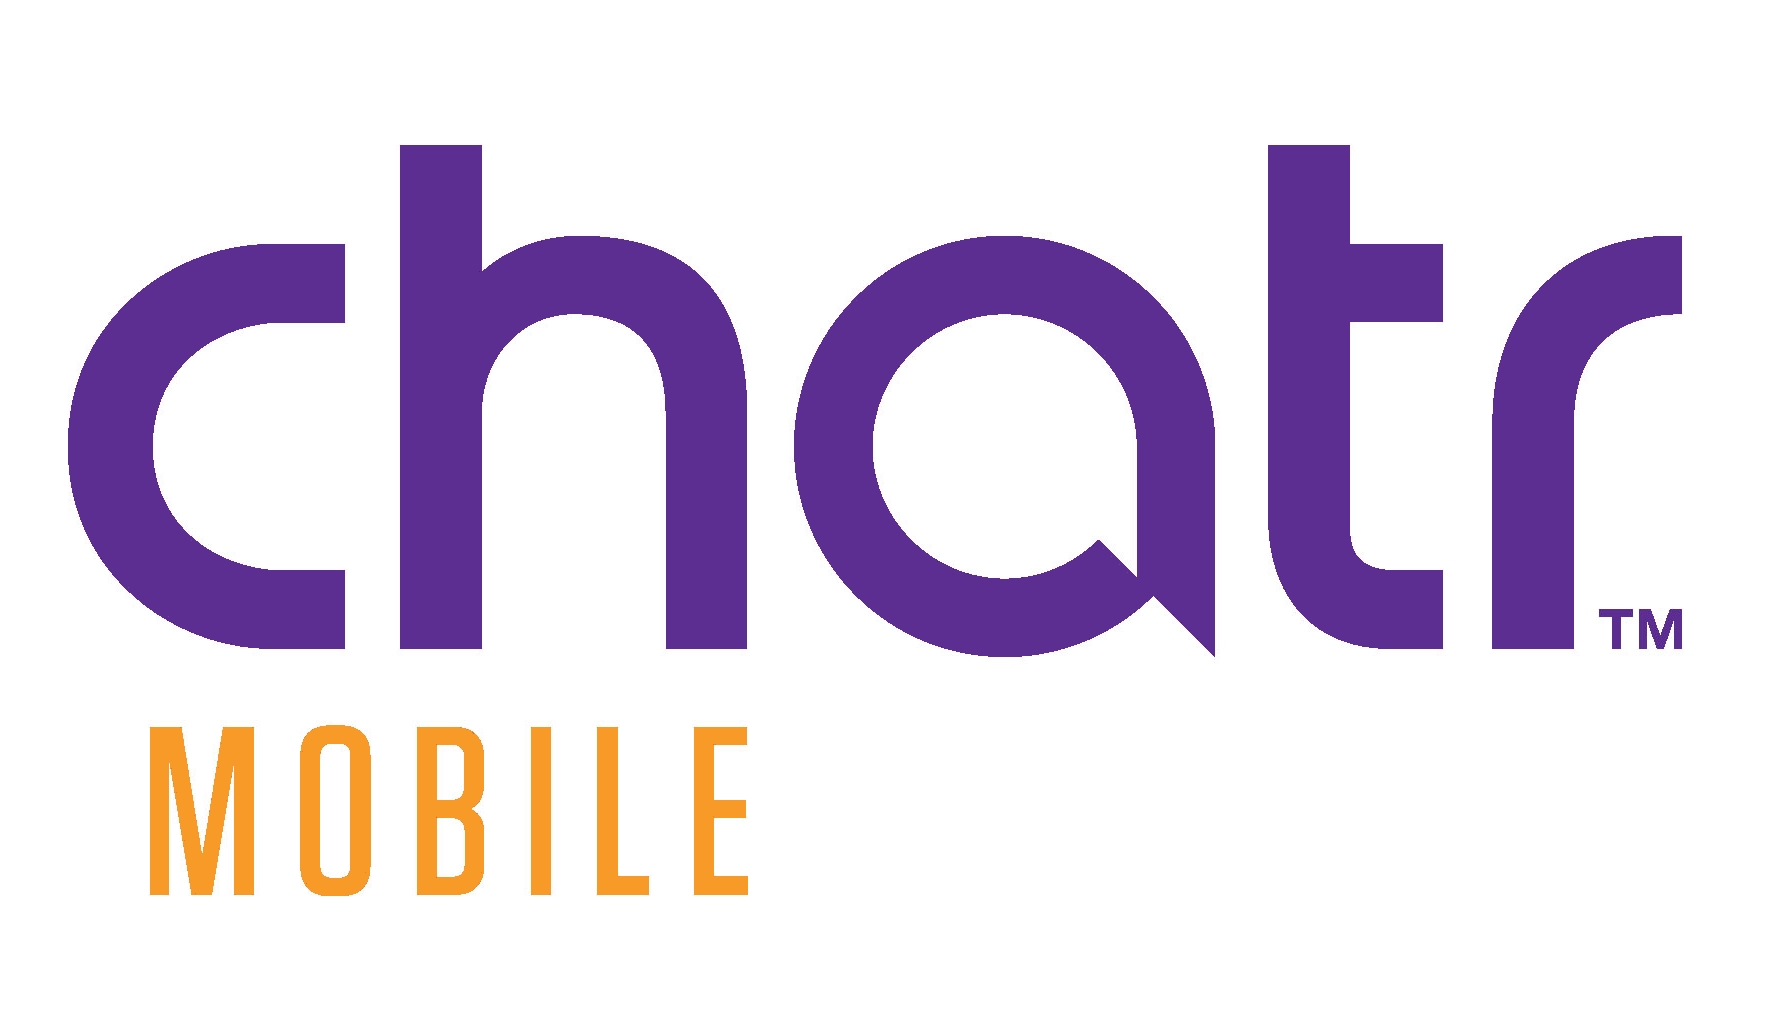 Chatr logo, logotype